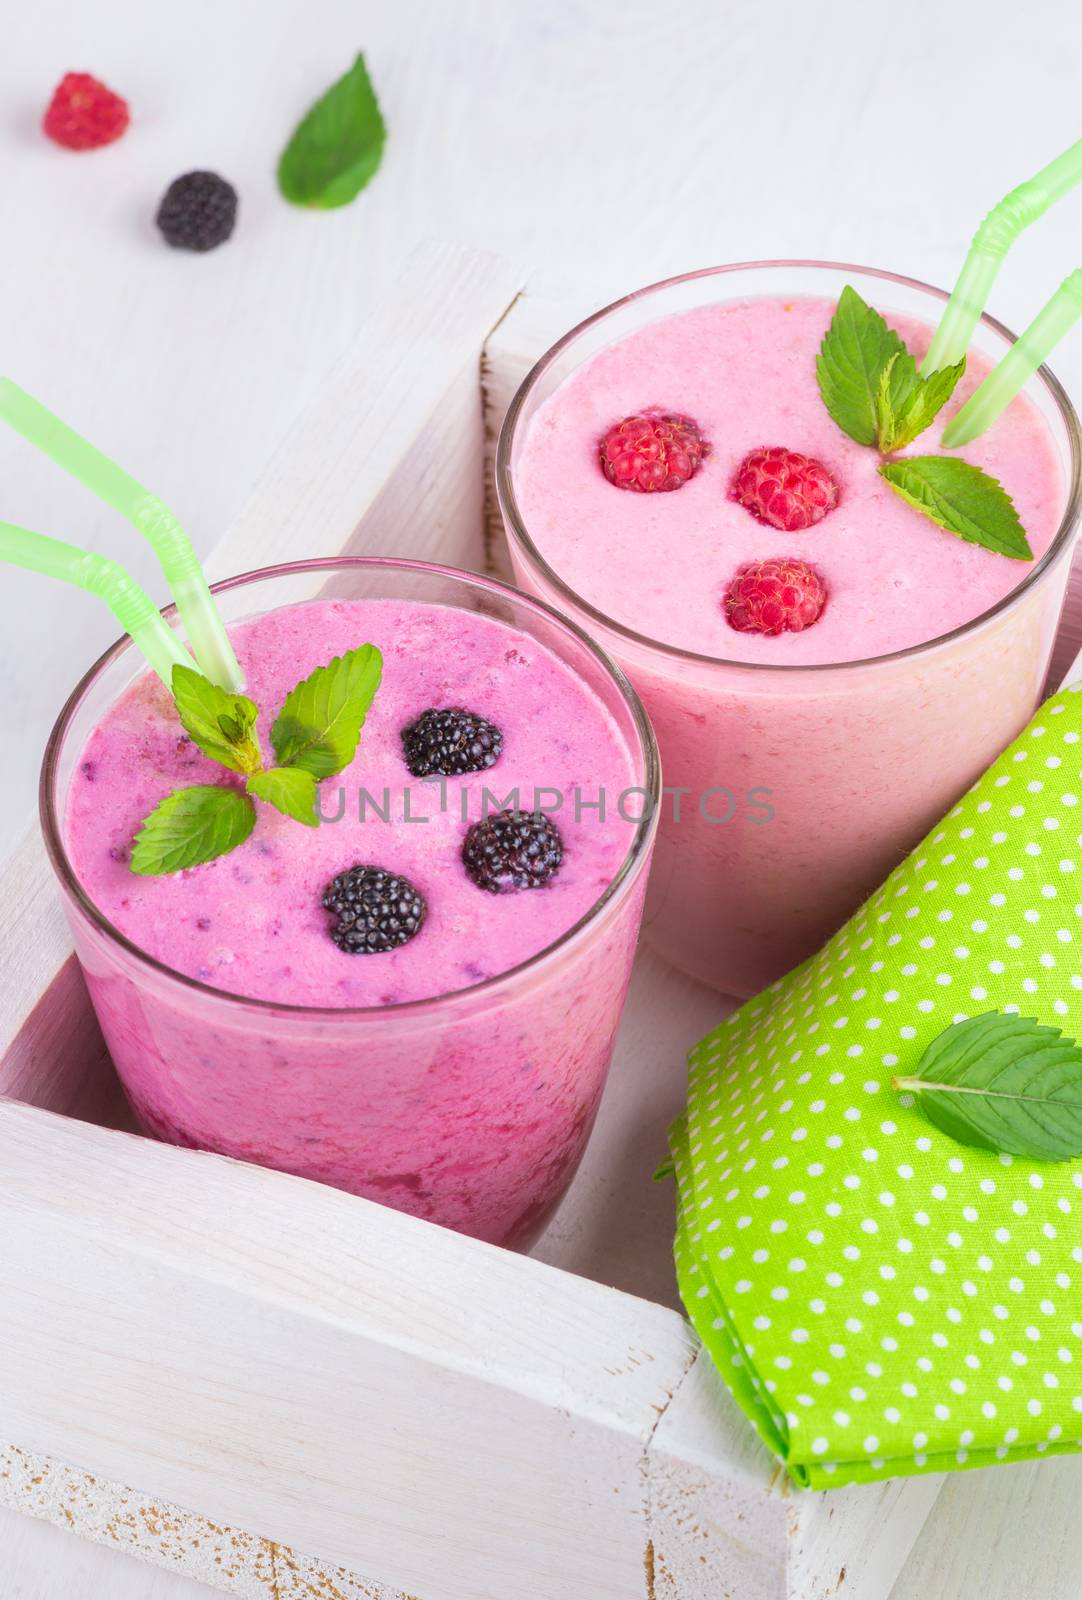 Raspberry and blackberry dairy smoothies  by iprachenko